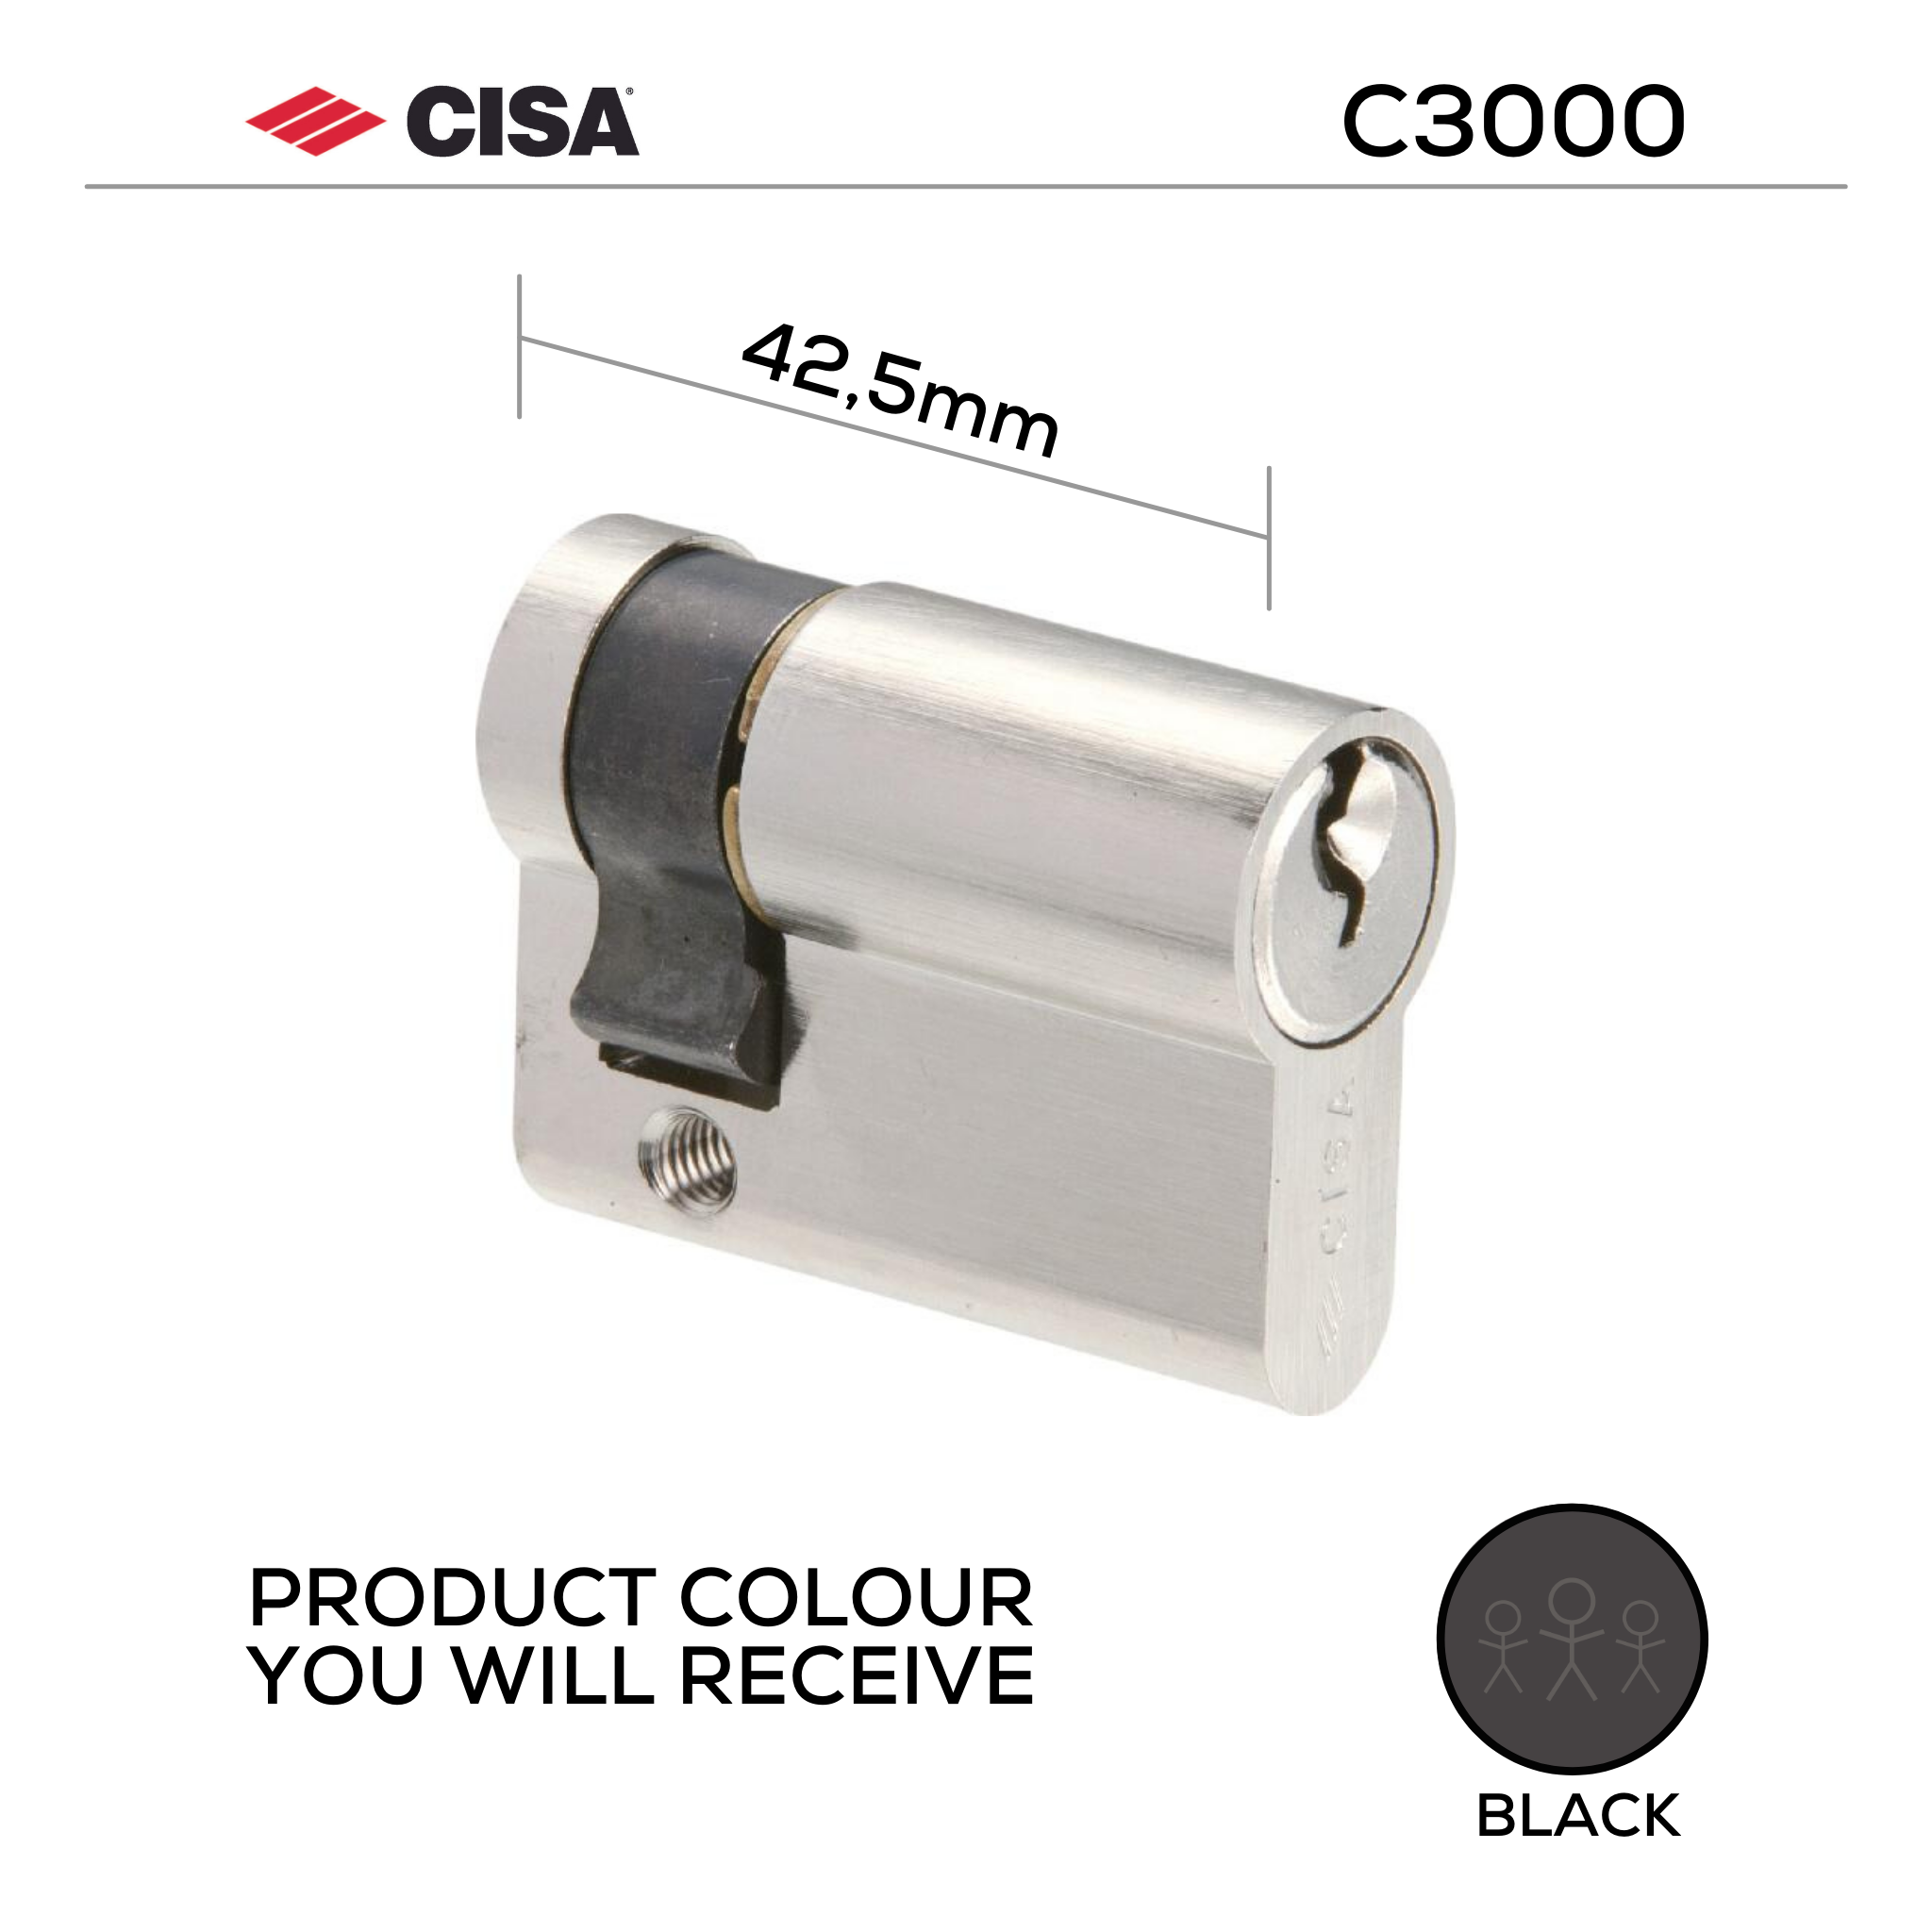 0N314-07-12-BLK-KD, 42.5mm - 32.5/10, Half (Single Cylinder), C3000, Key, Keyed to Differ (Standard), 3 Keys, 6 Pin, Black, CISA